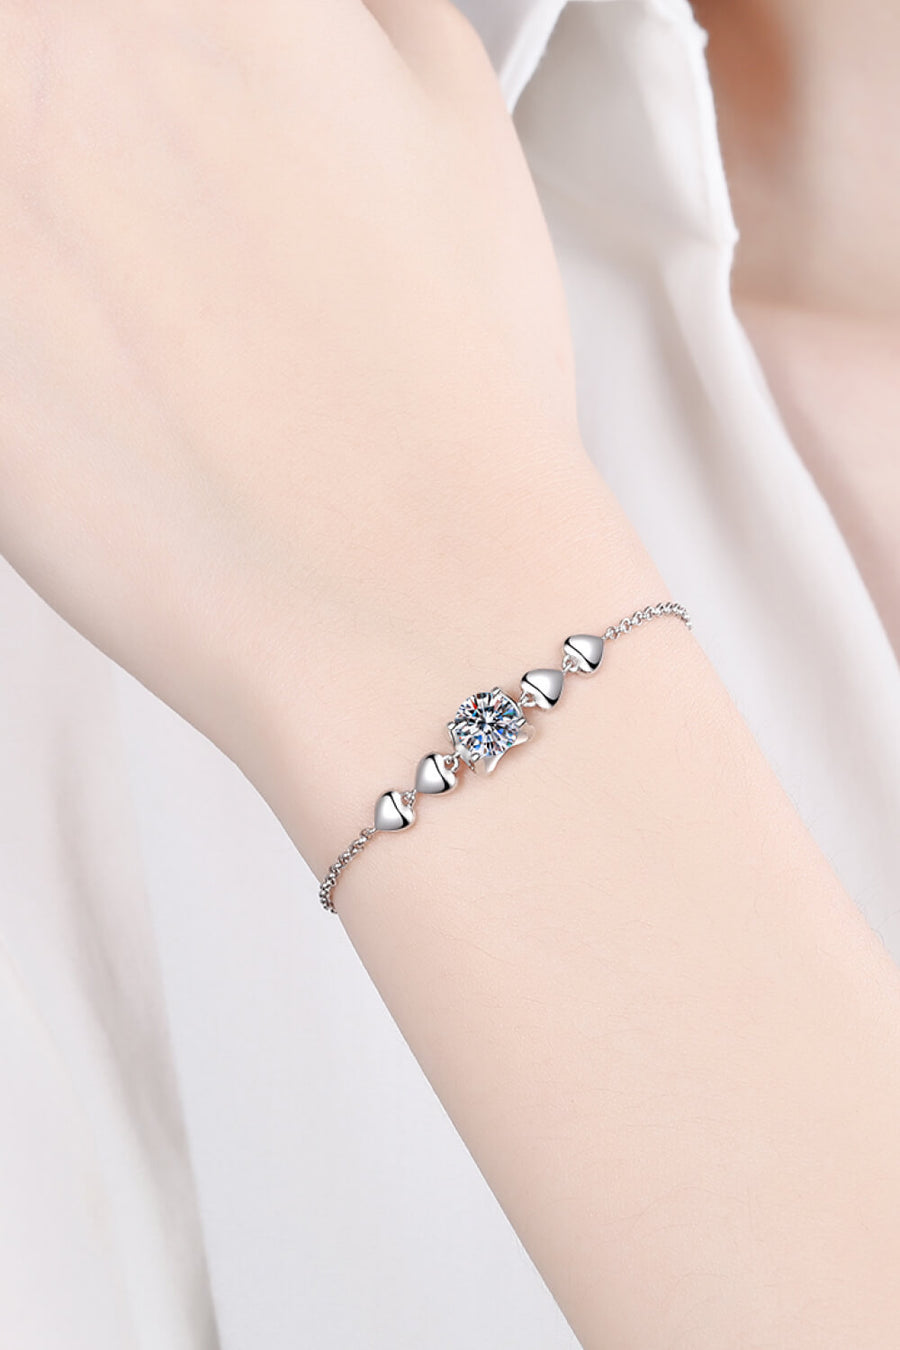 Best Diamond Bracelet Jewelry Gifts for Women | 1 Carat Round Diamond Heart Bracelet | MASON New York